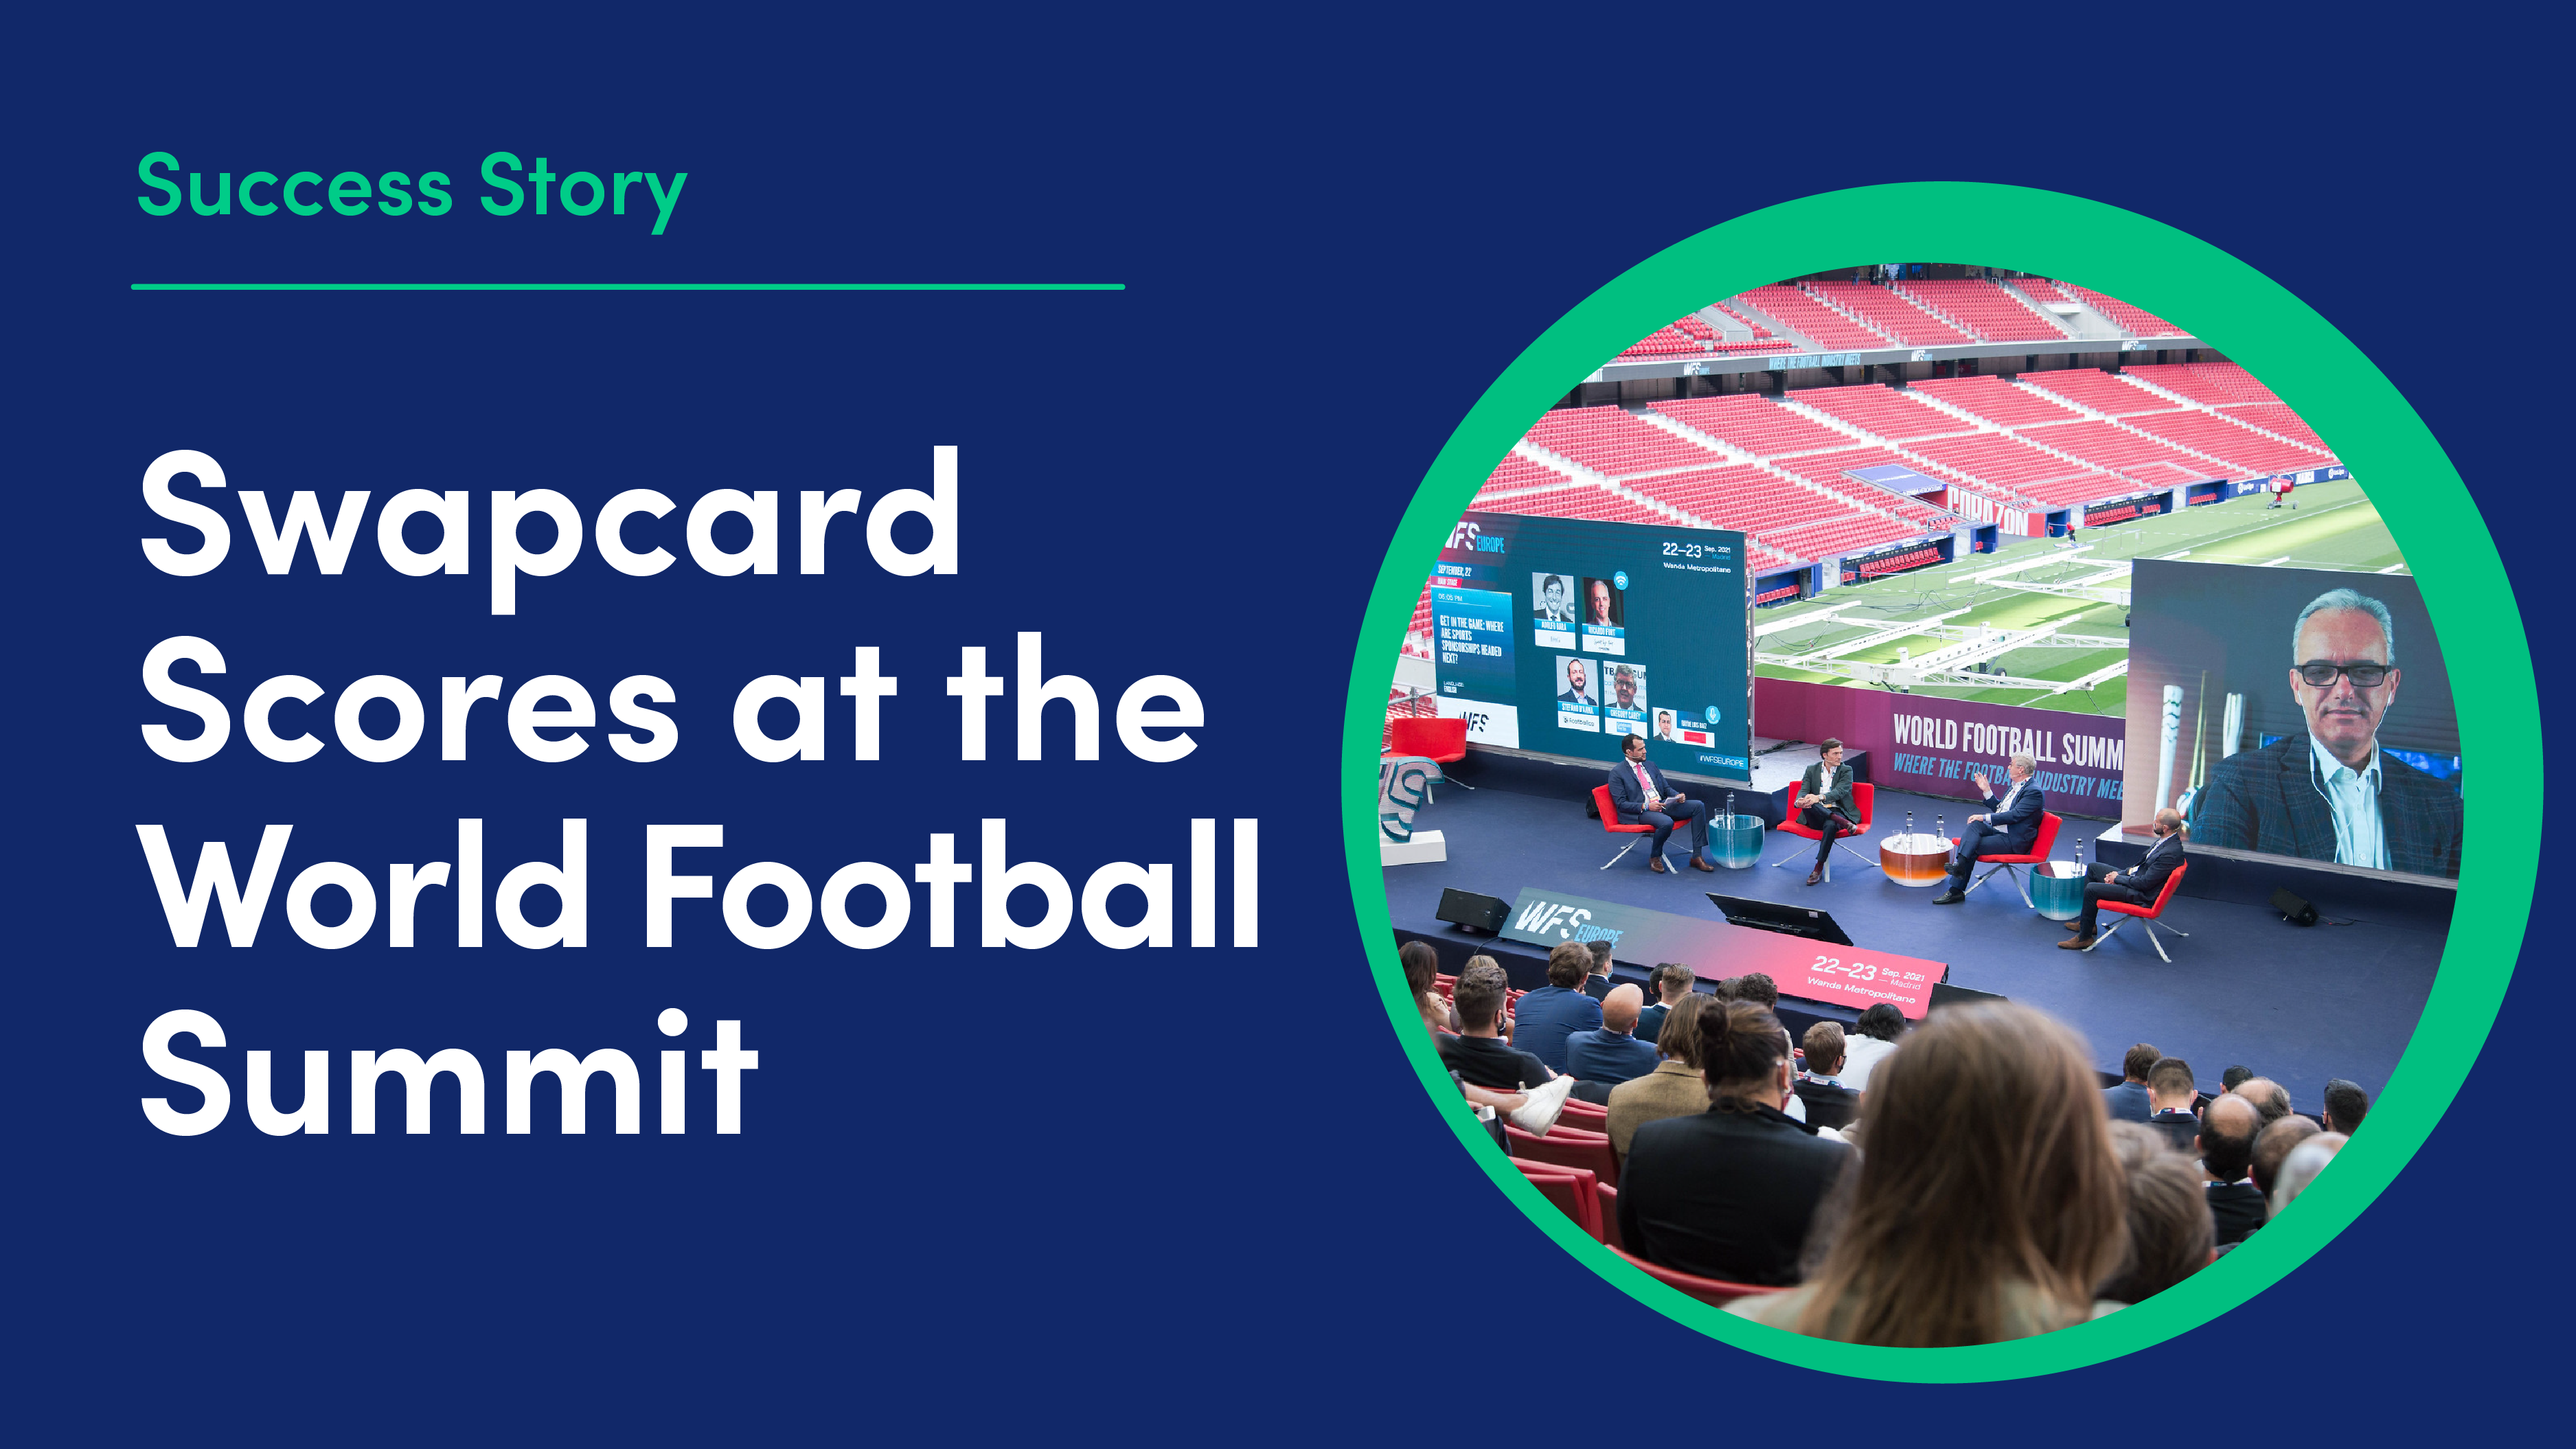 Swapcard Scores at the World Football Summit